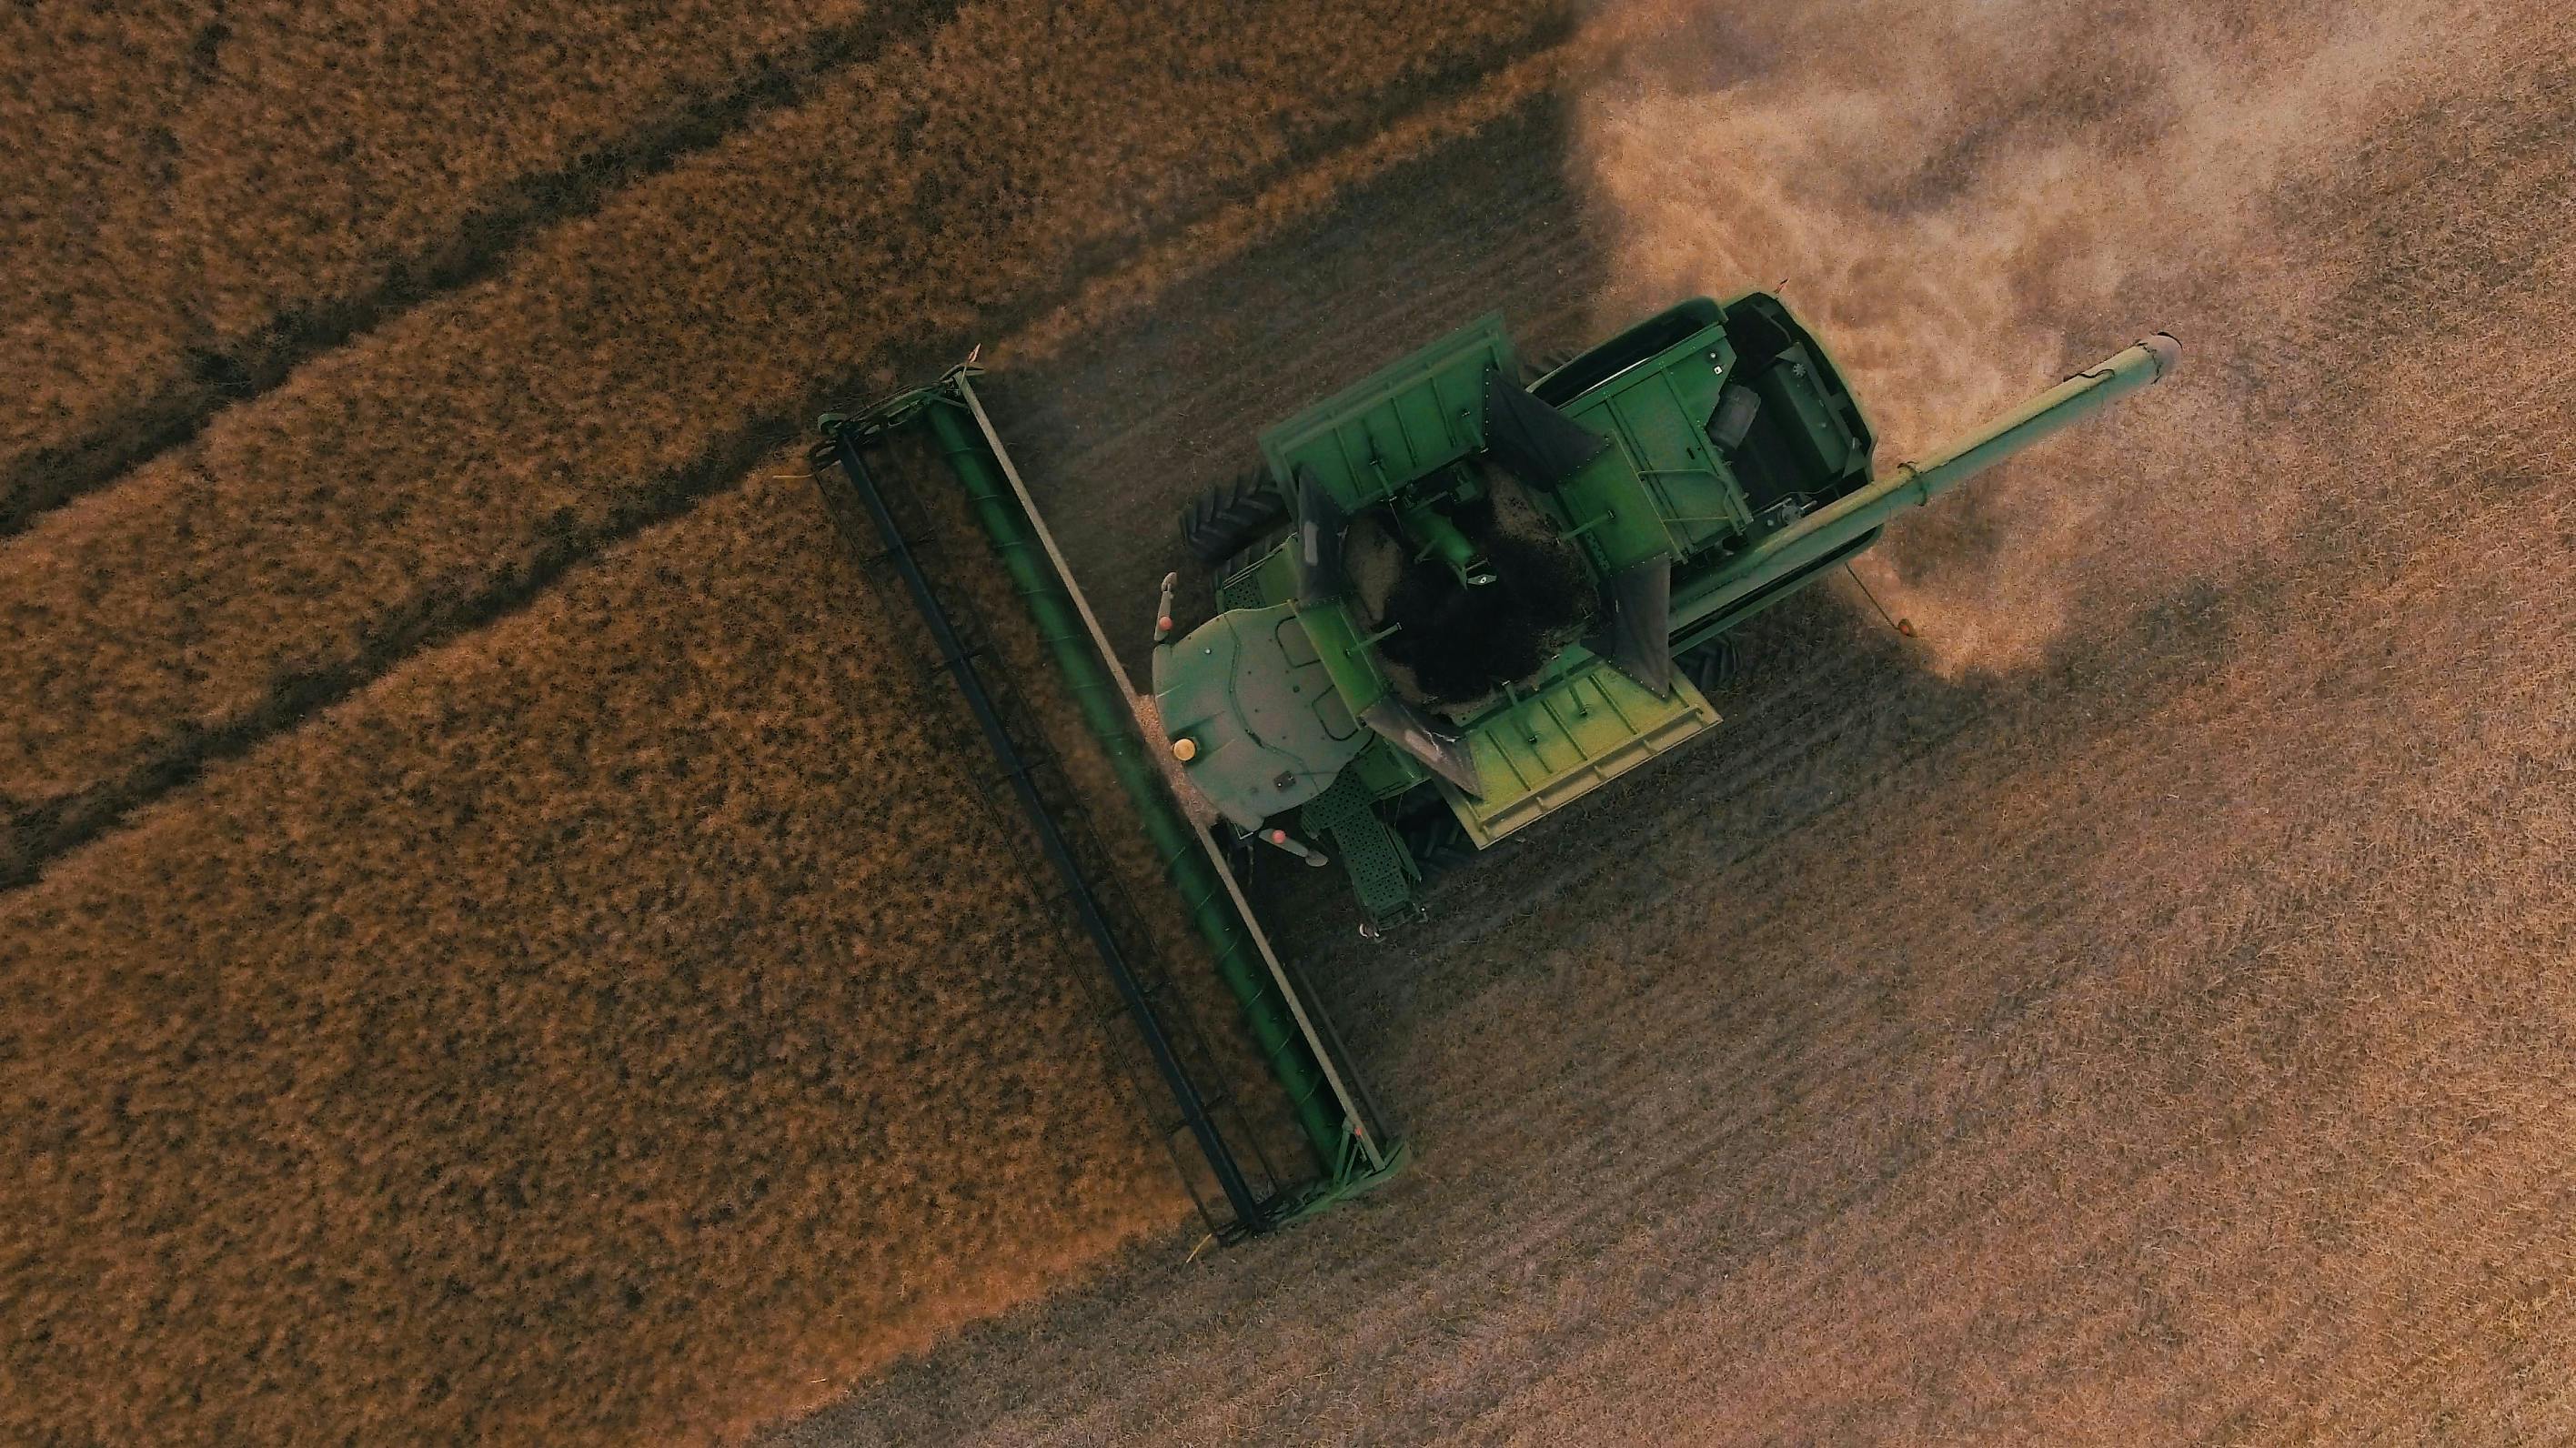 An overhead shot of a harvester working a field.